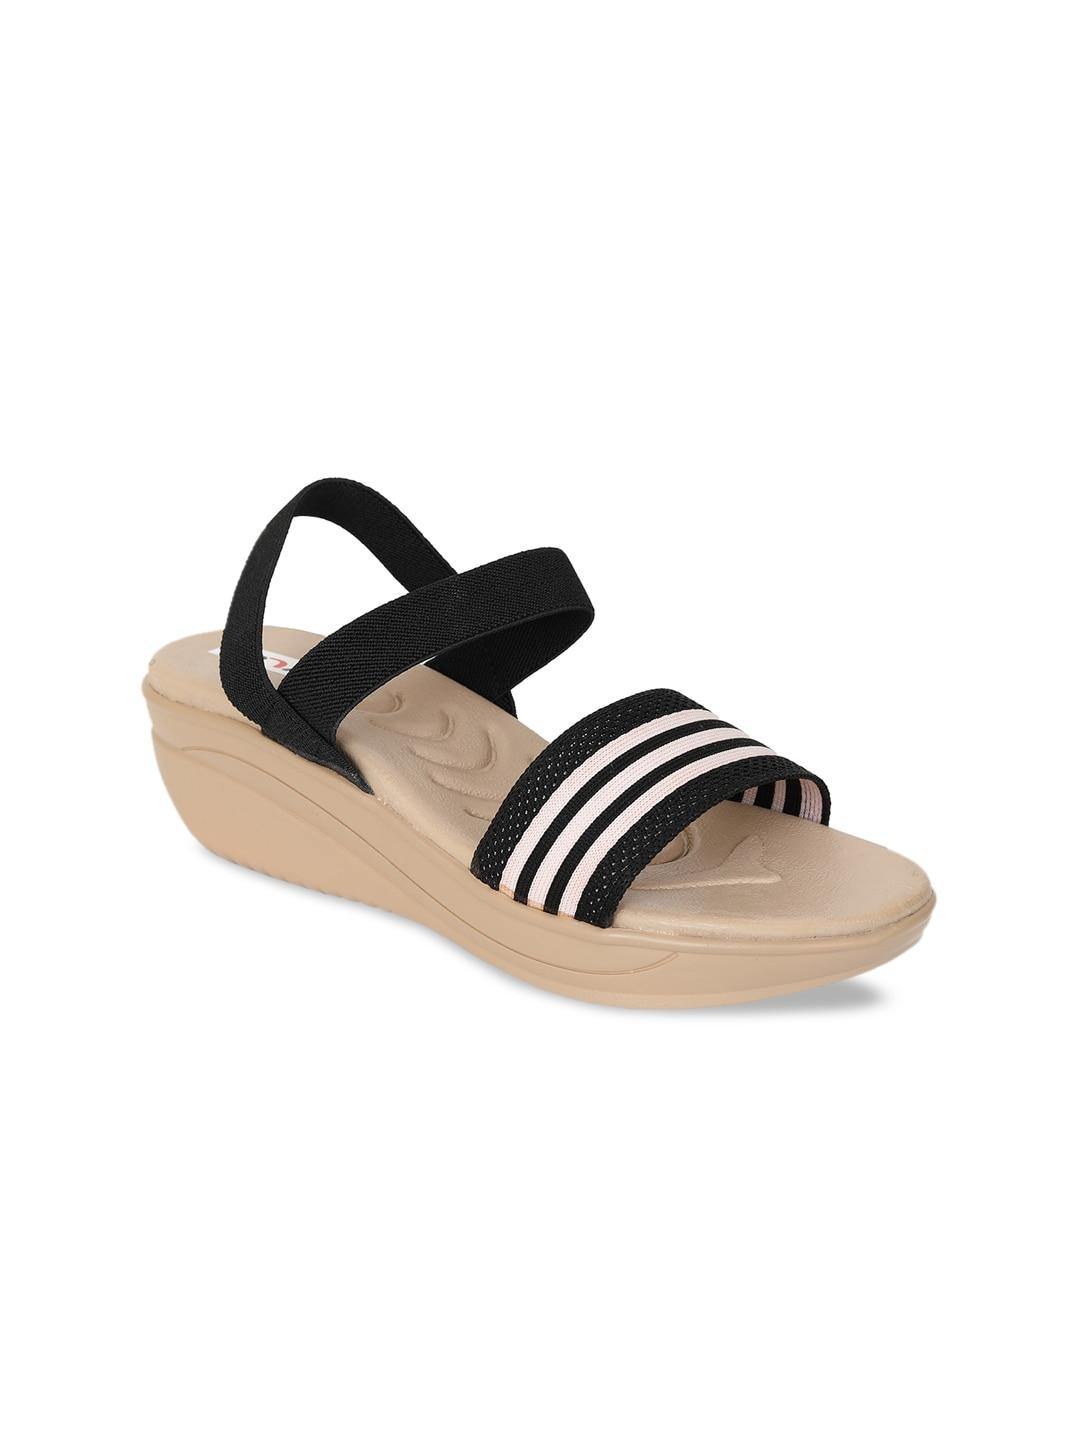 zyla-black-striped-wedge-sandals